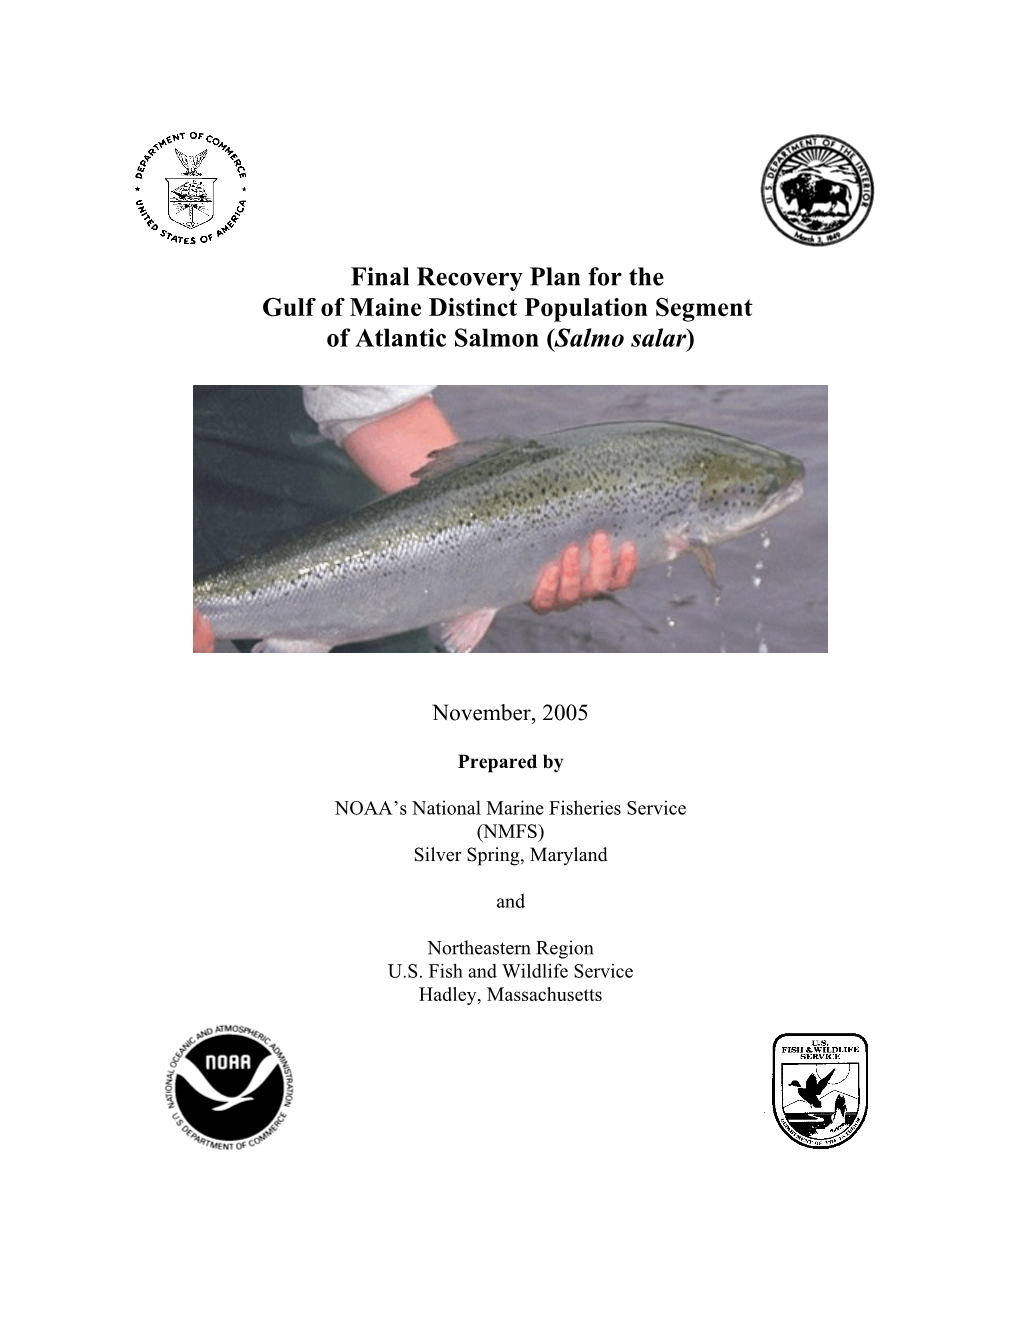 Recovery Plan for the Gulf of Maine Distinct Population Segment of Atlantic Salmon (Salmo Salar)